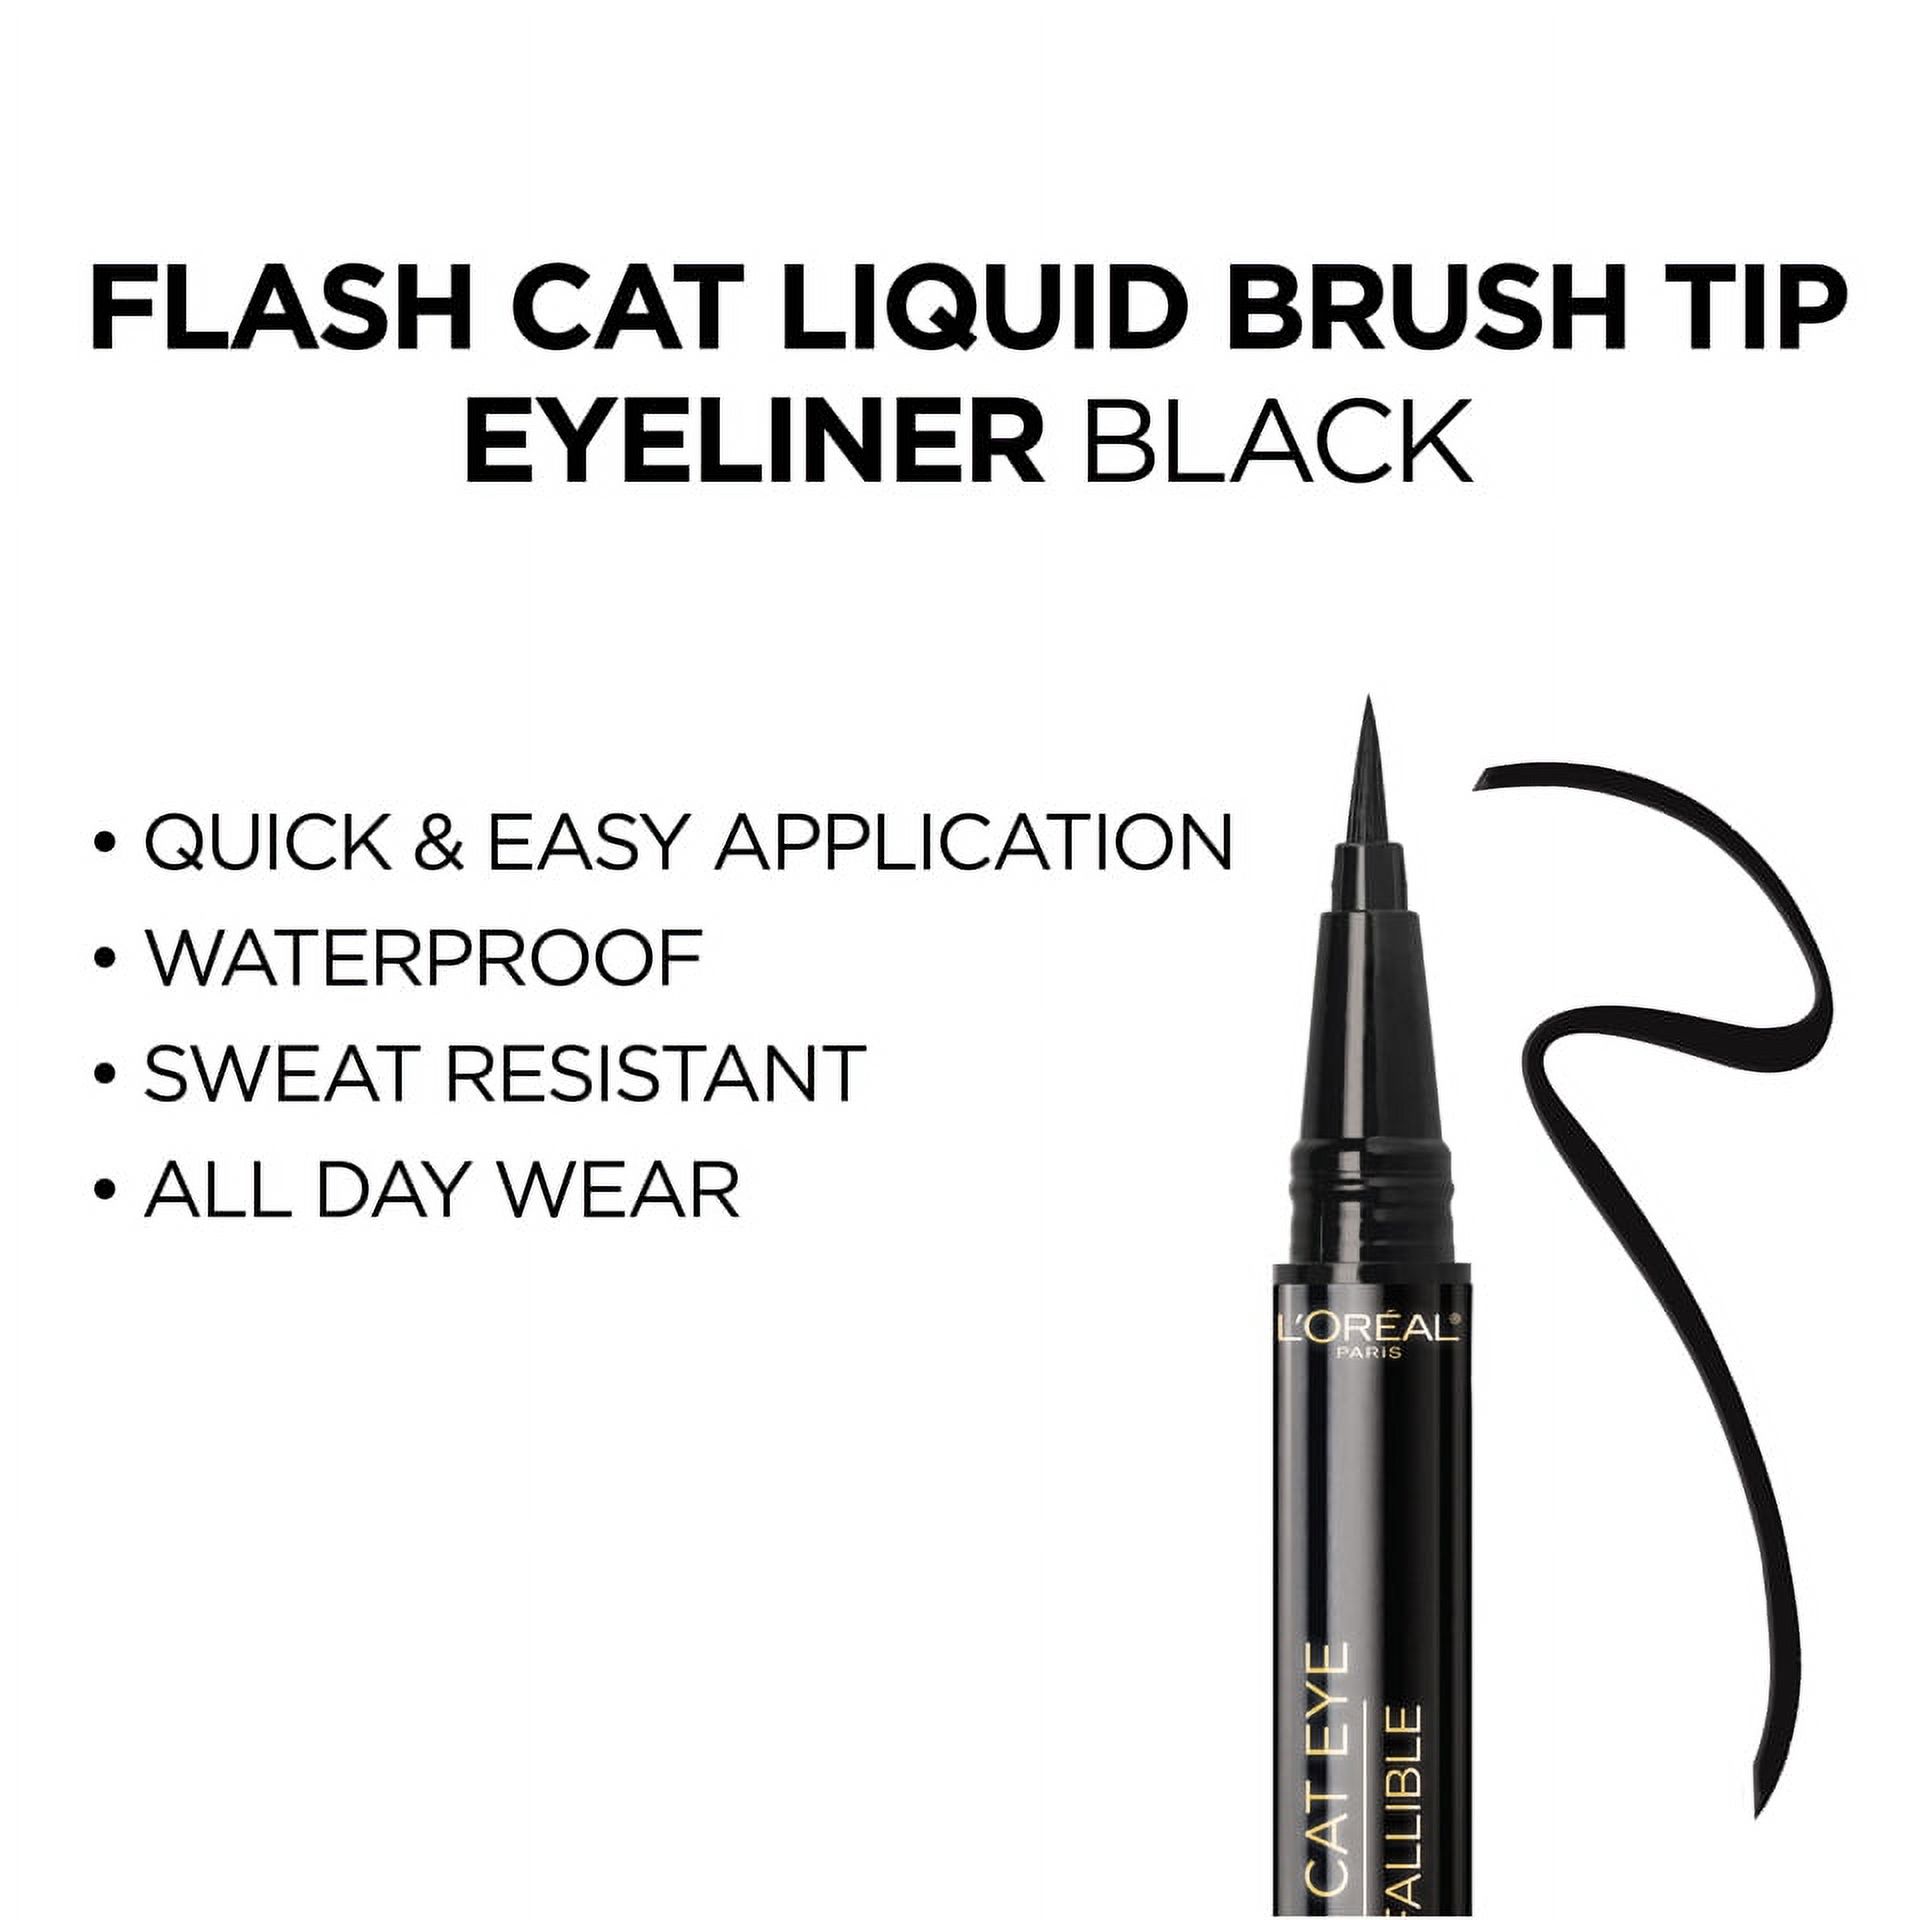 L'Oreal Paris Infallible Flash Cat Eye Waterproof Brush Tip Liquid Eyeliner, Black - image 5 of 19